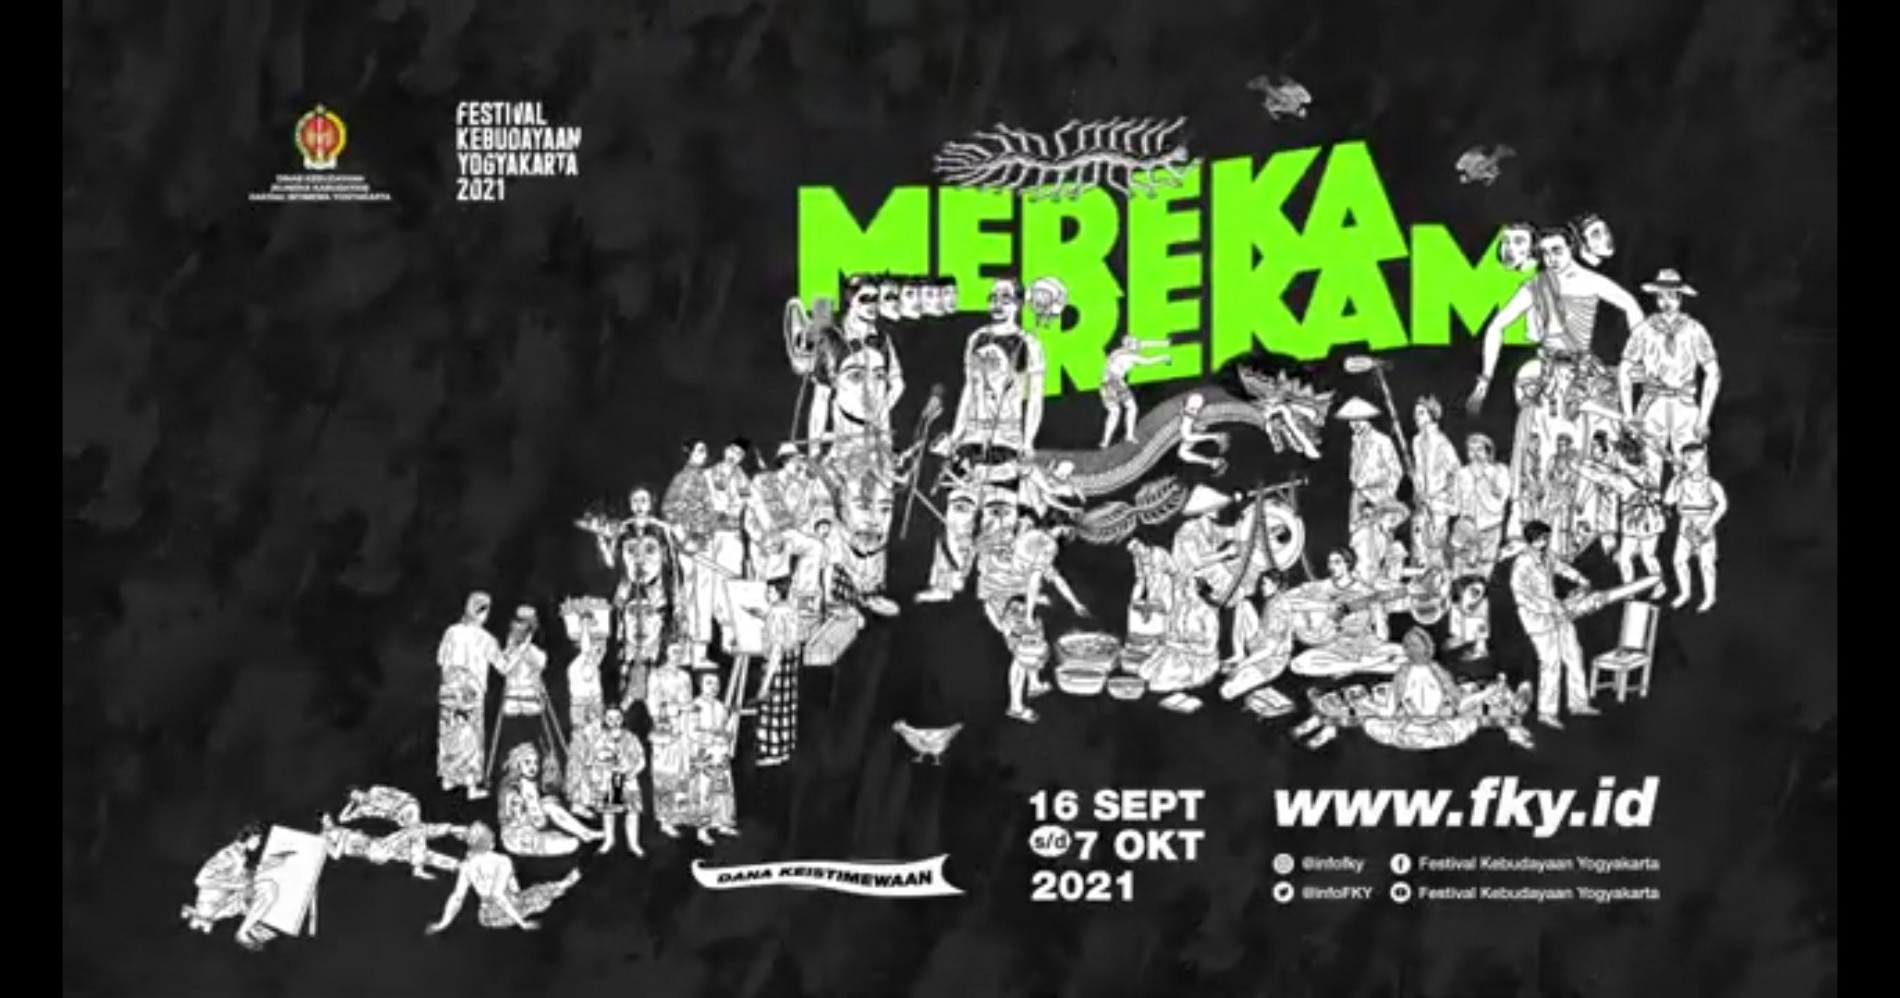 Festival Kesenian Yogyakarta 2021 "Mereka Rekam" (Dok. FKY)